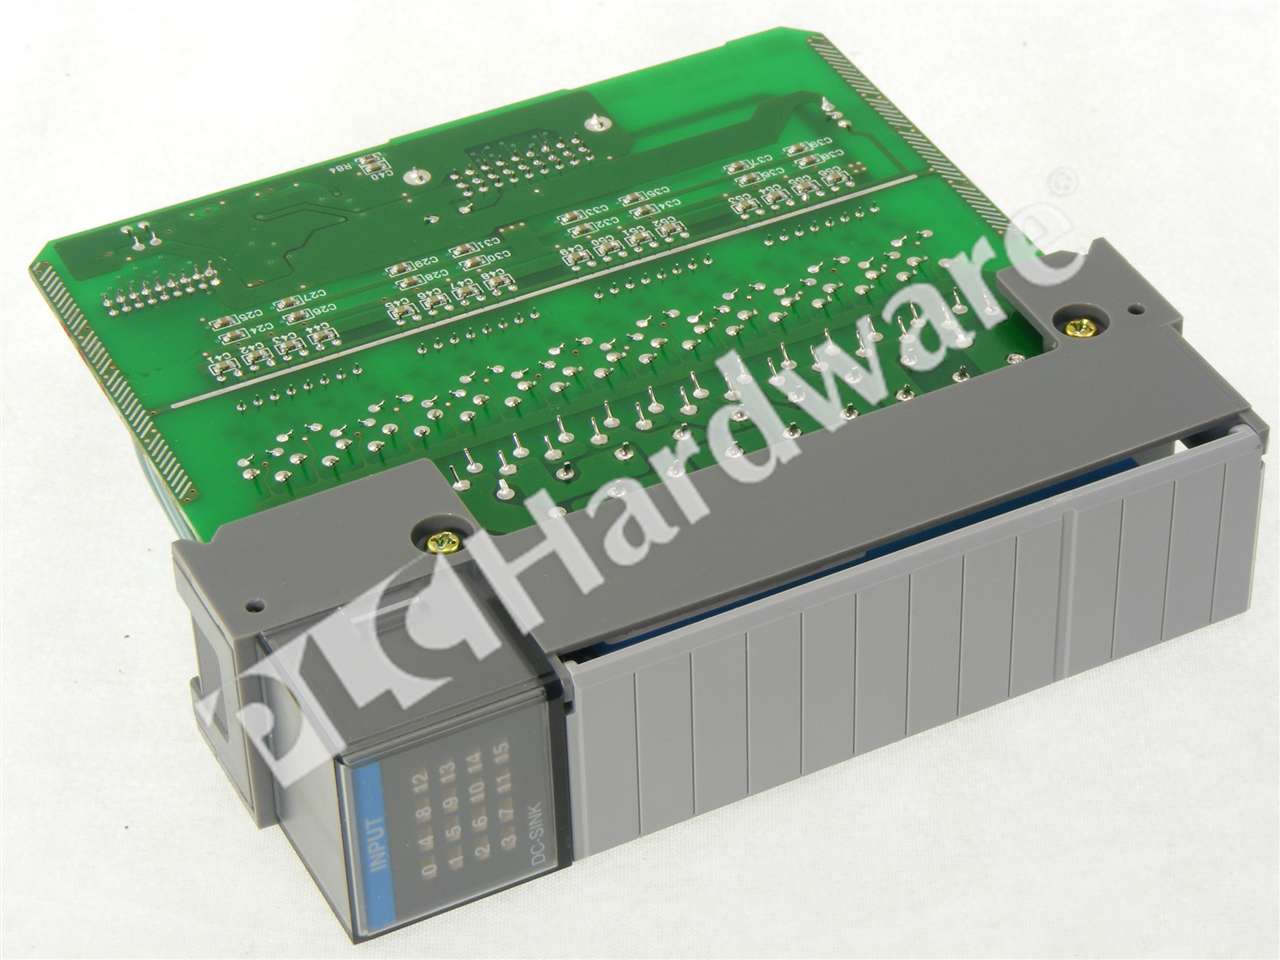 PLC Hardware Allen Bradley 1746-IB16 Series C, Used in PLCH Packaging